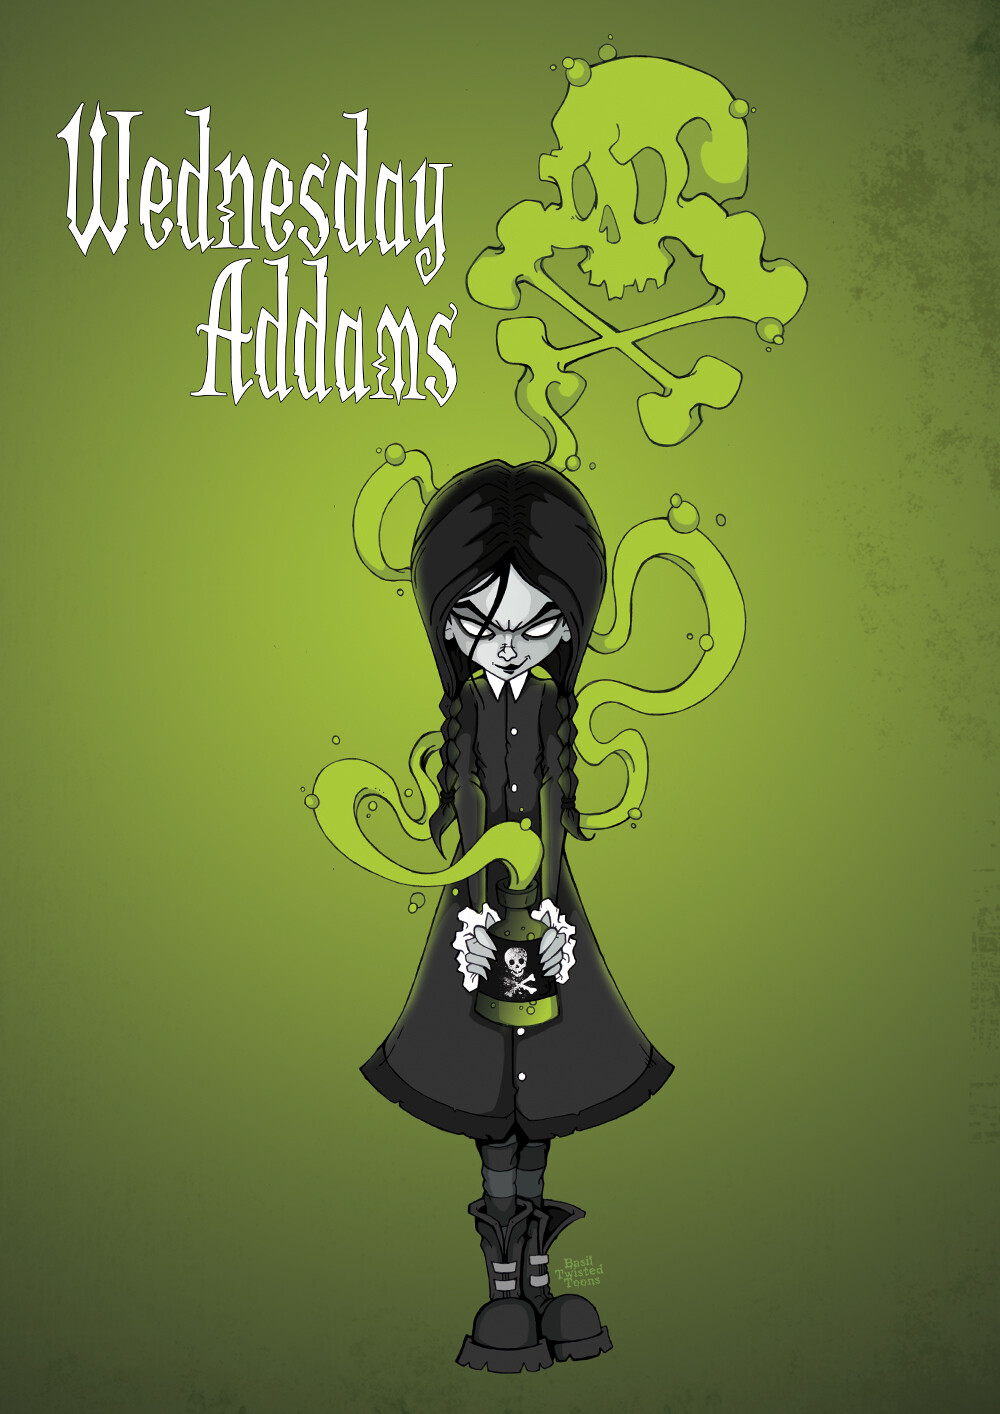 Wednesday Addams Artwork Wallpapers